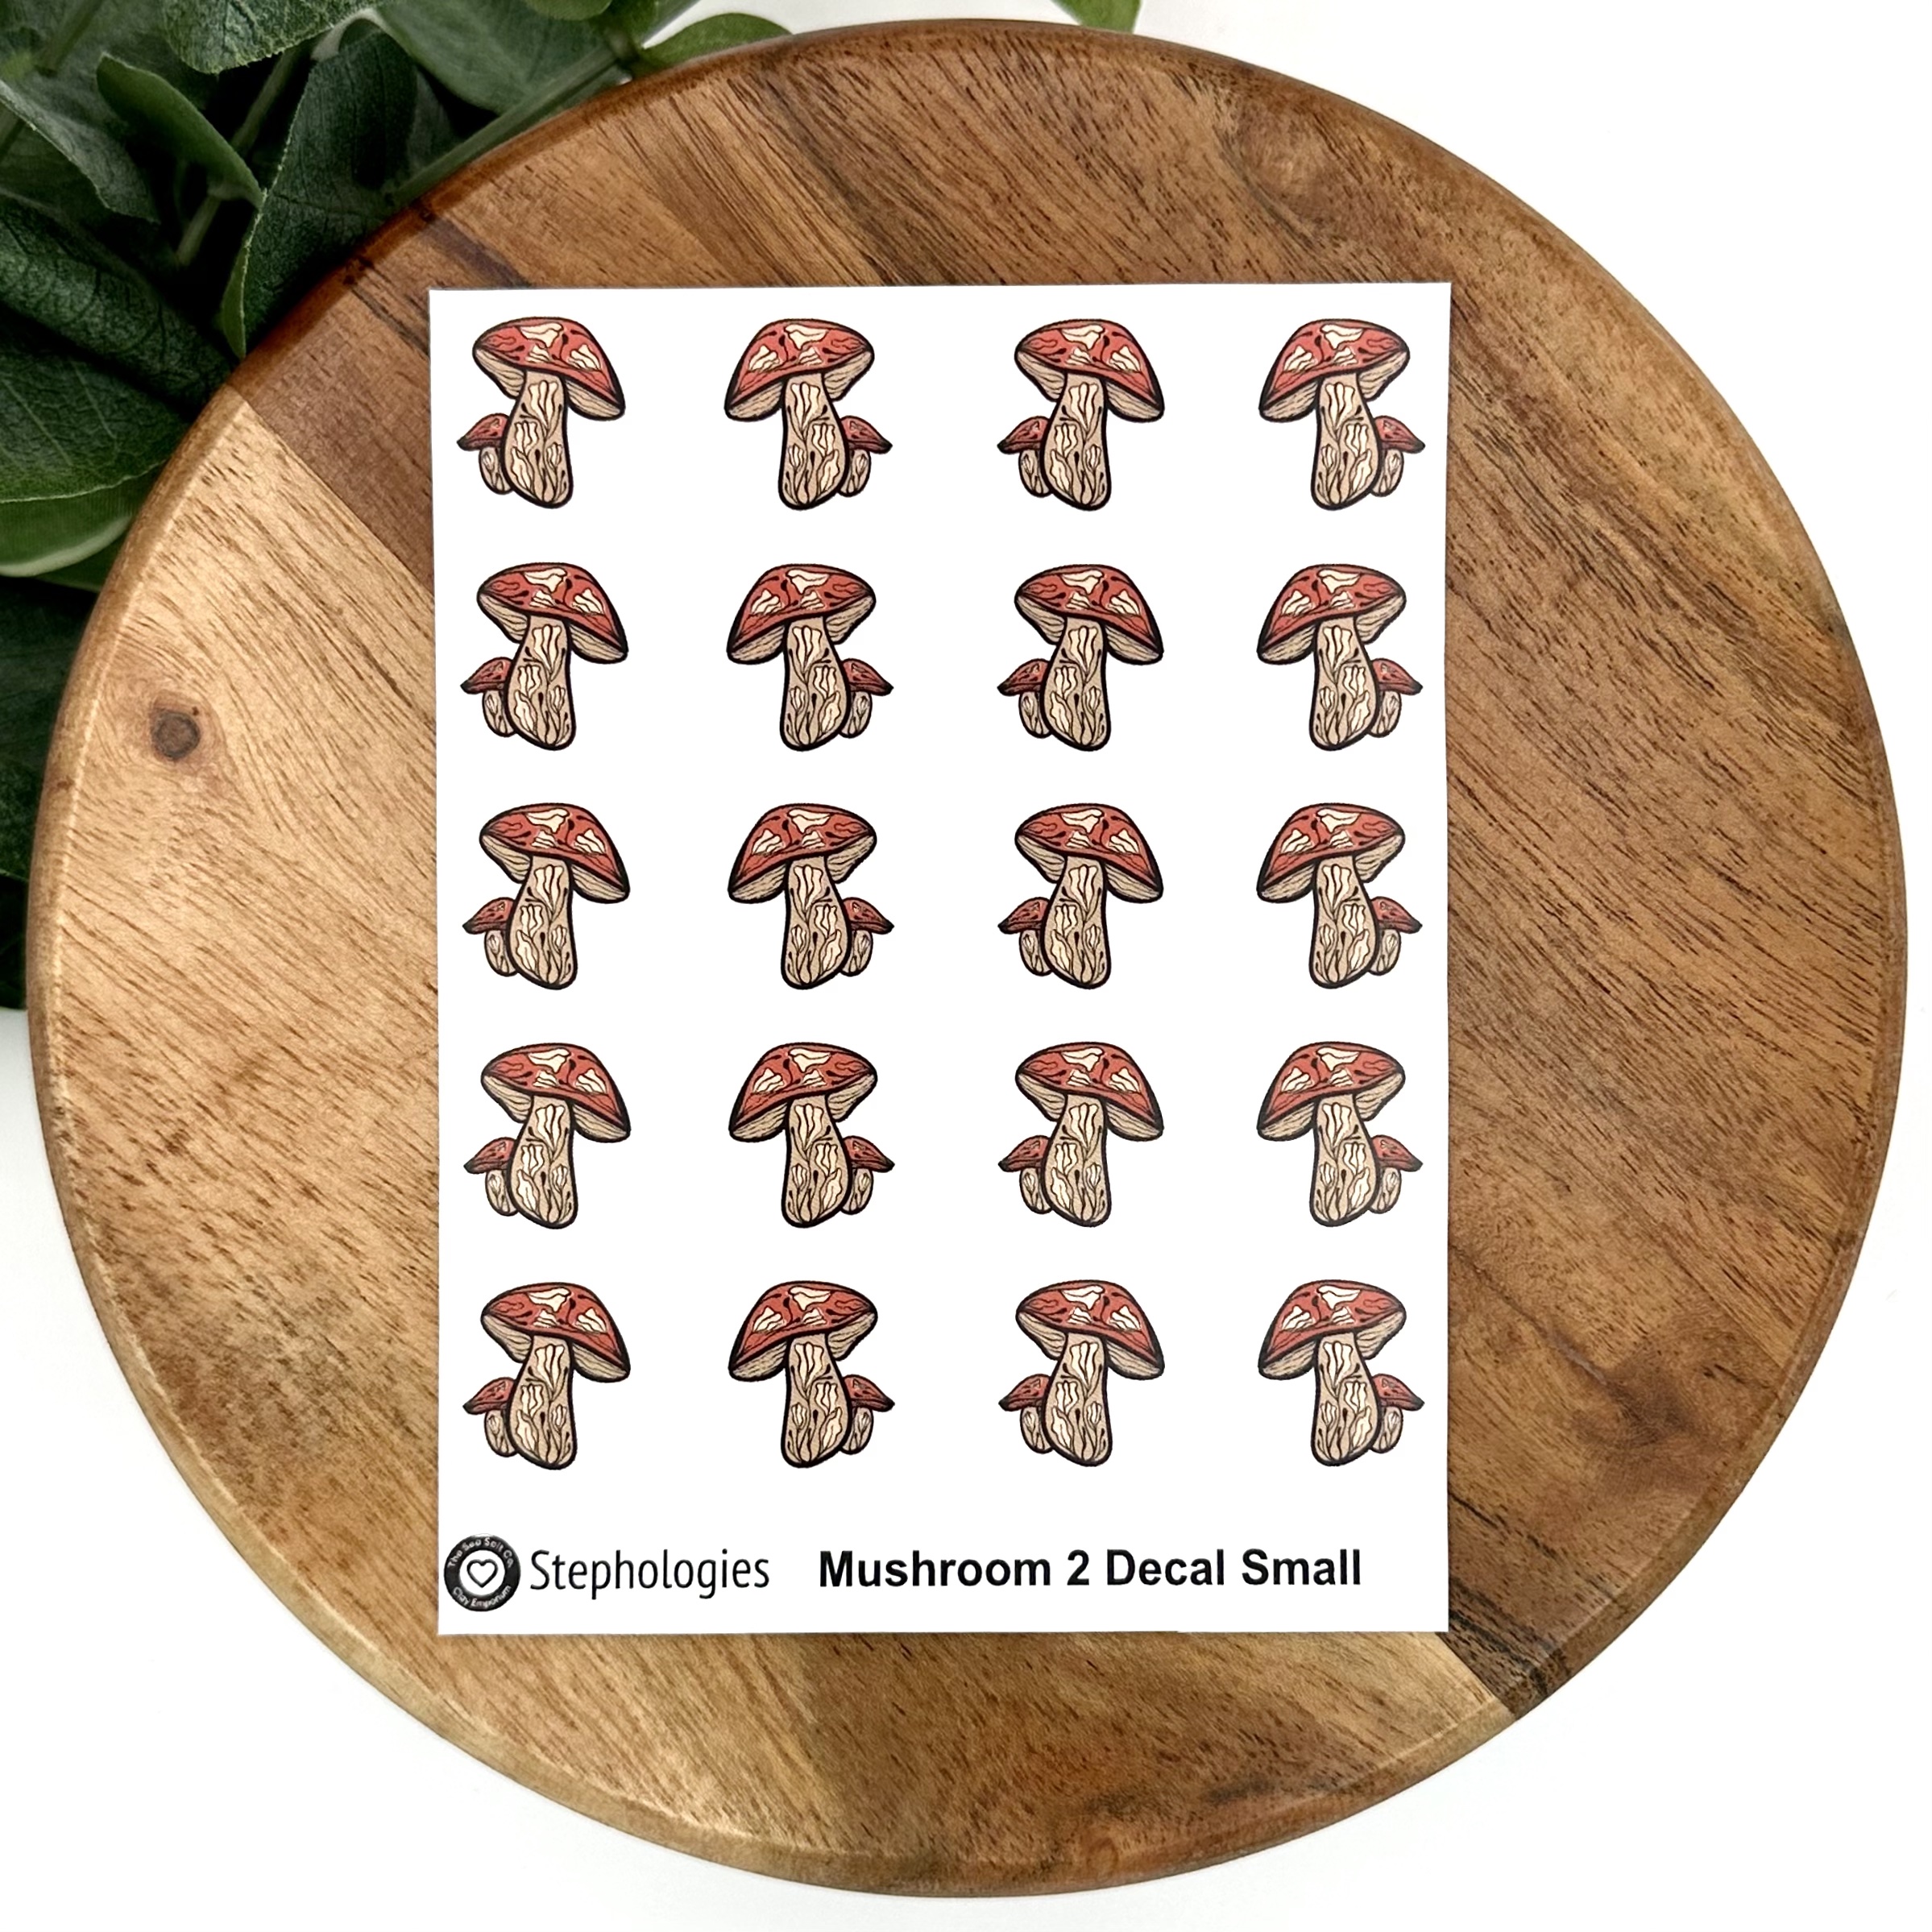 Mushrooms 2 Decal Small Stephologies